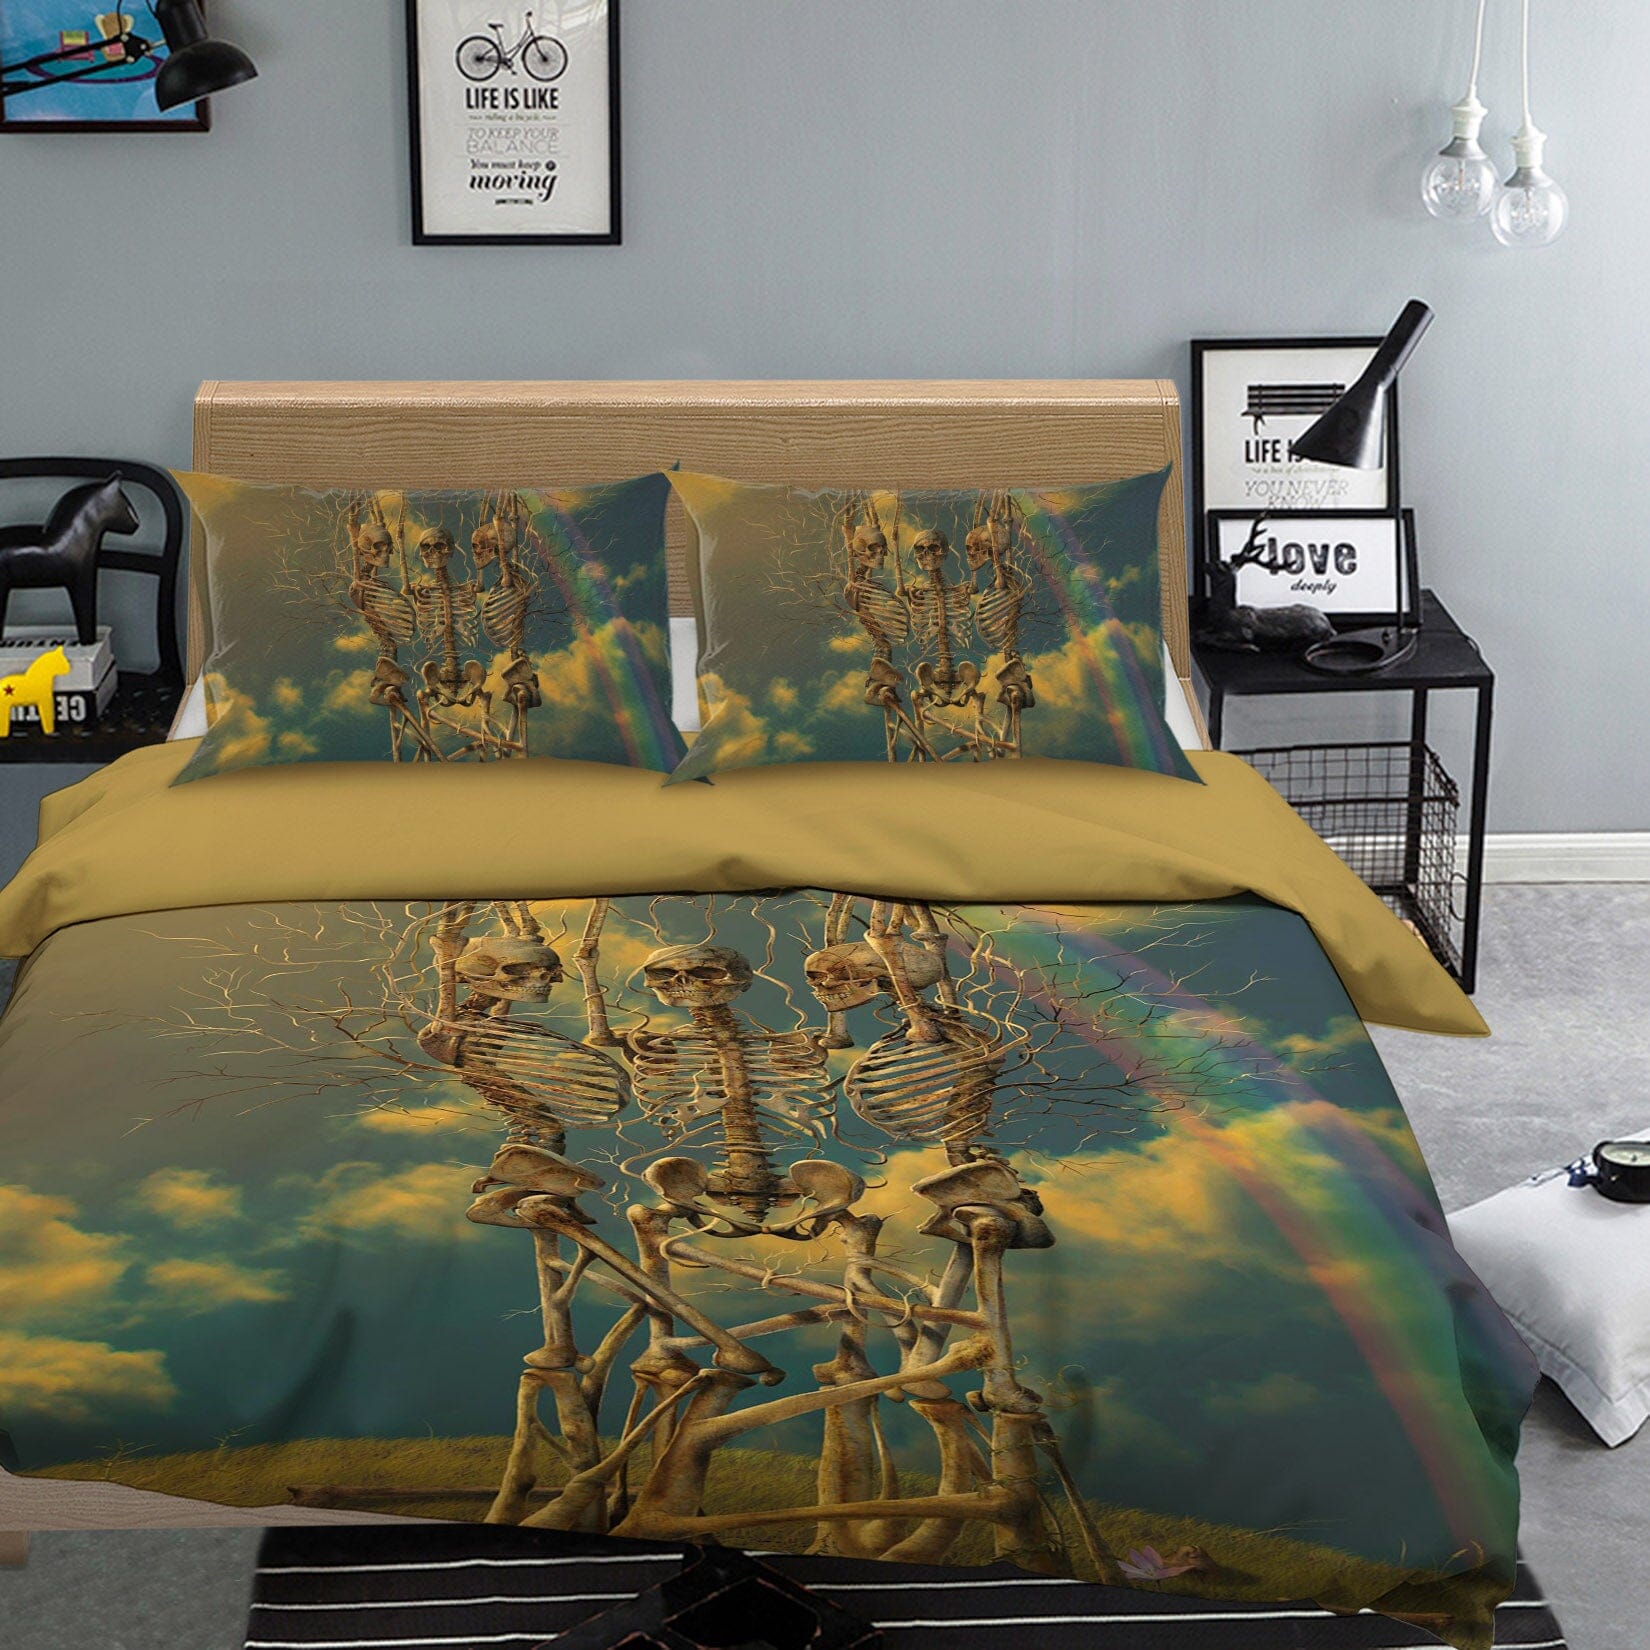 3D Life Cycle 056 Bed Pillowcases Quilt Exclusive Designer Vincent Quiet Covers AJ Creativity Home 